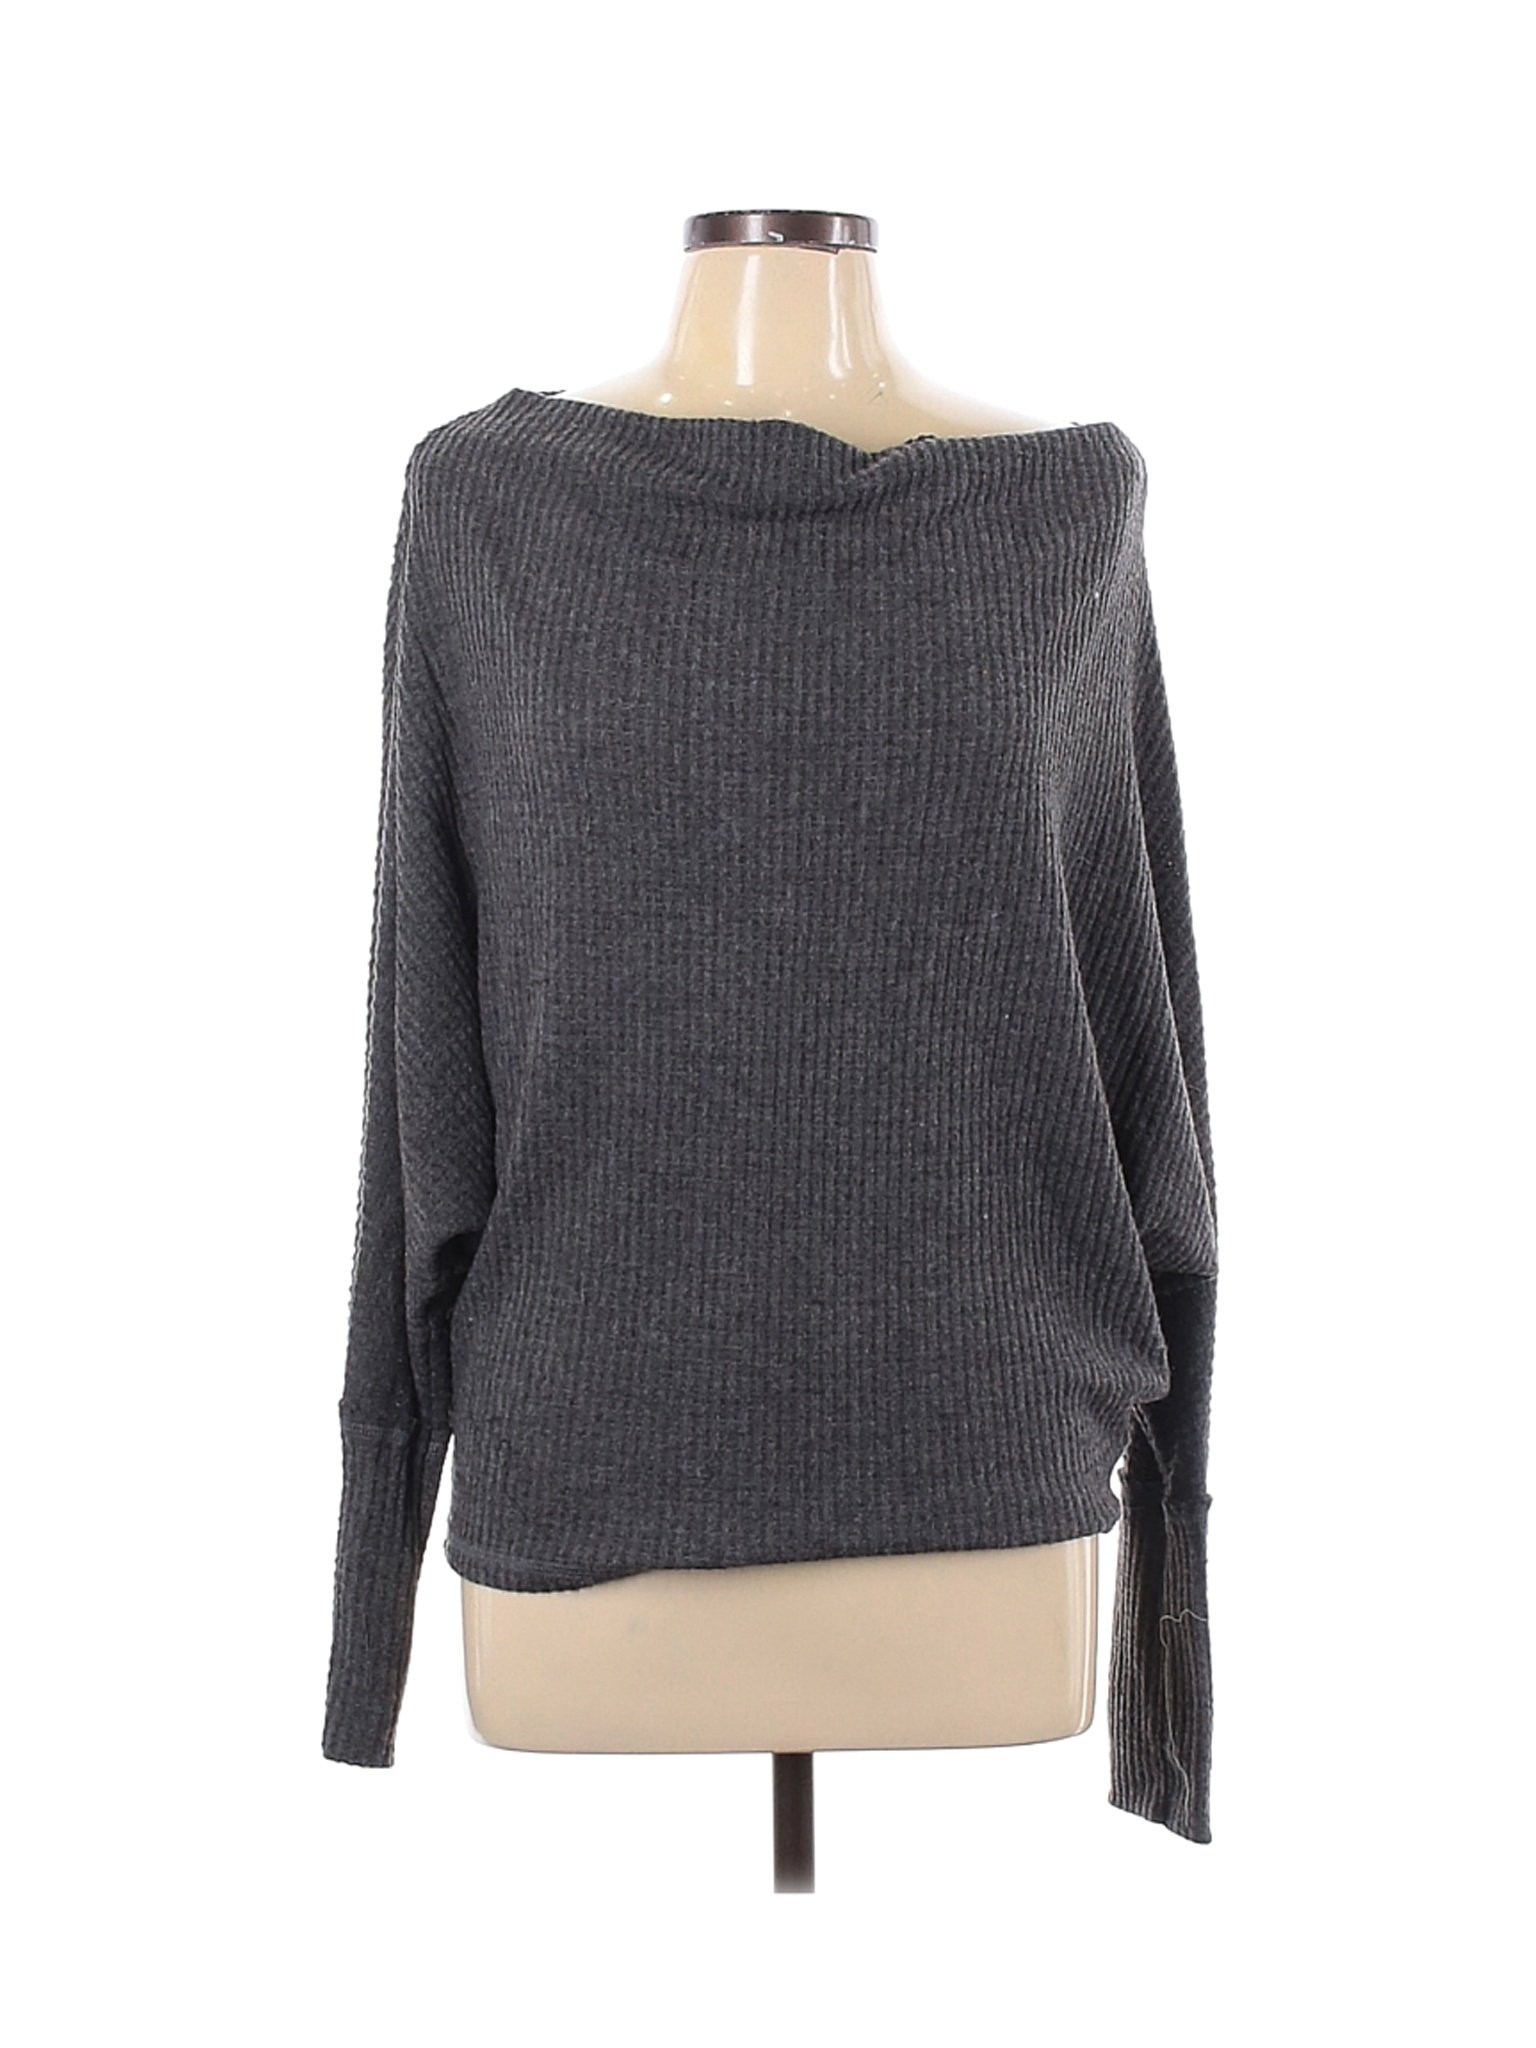 NWT Elan Women Gray Pullover Sweater L | eBay